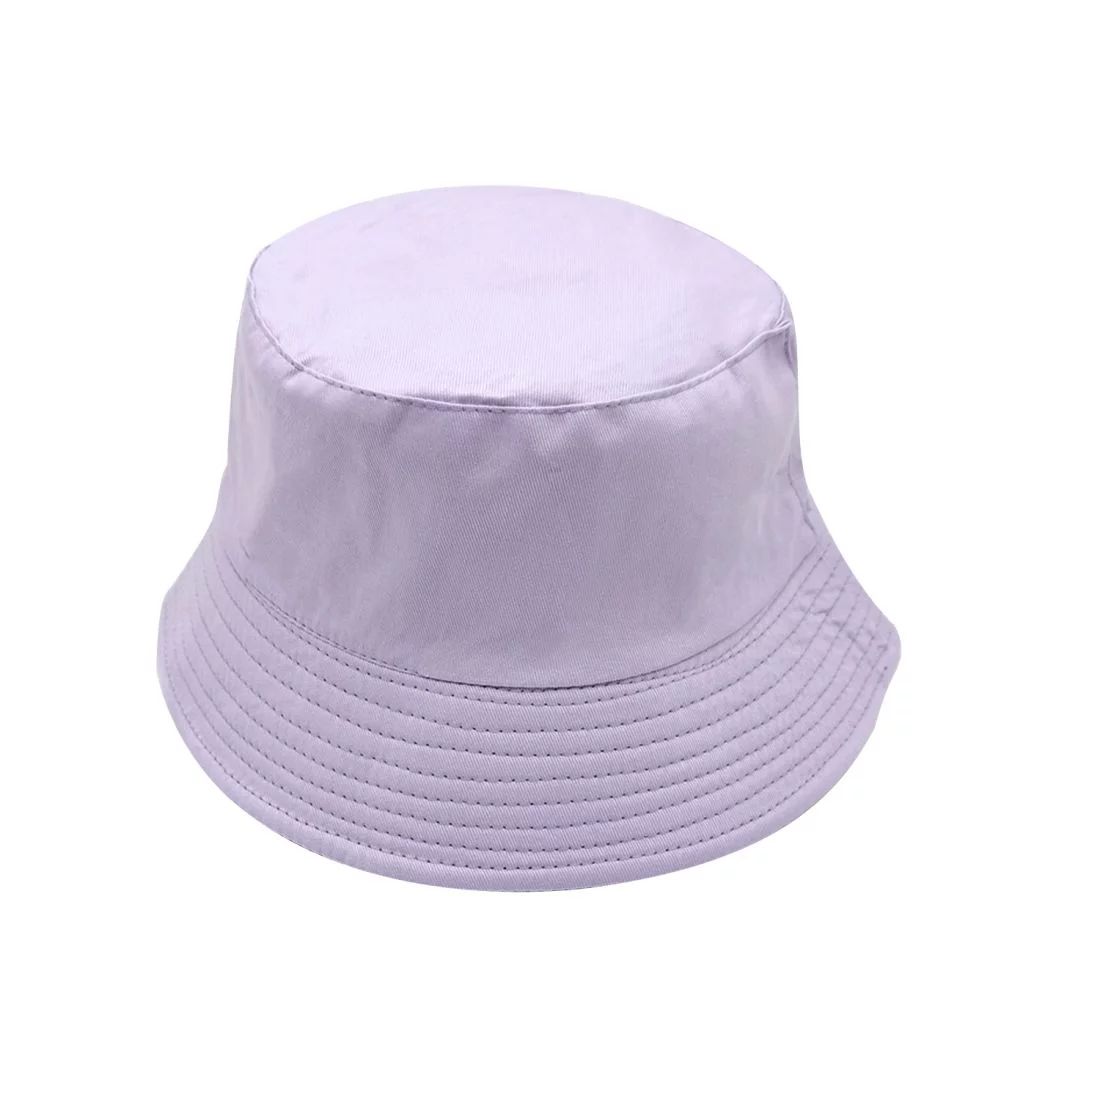 Empire Cove Cotton Bucket Hat Reversible Fisherman Cap Women Men Summer Lavender | Walmart (US)